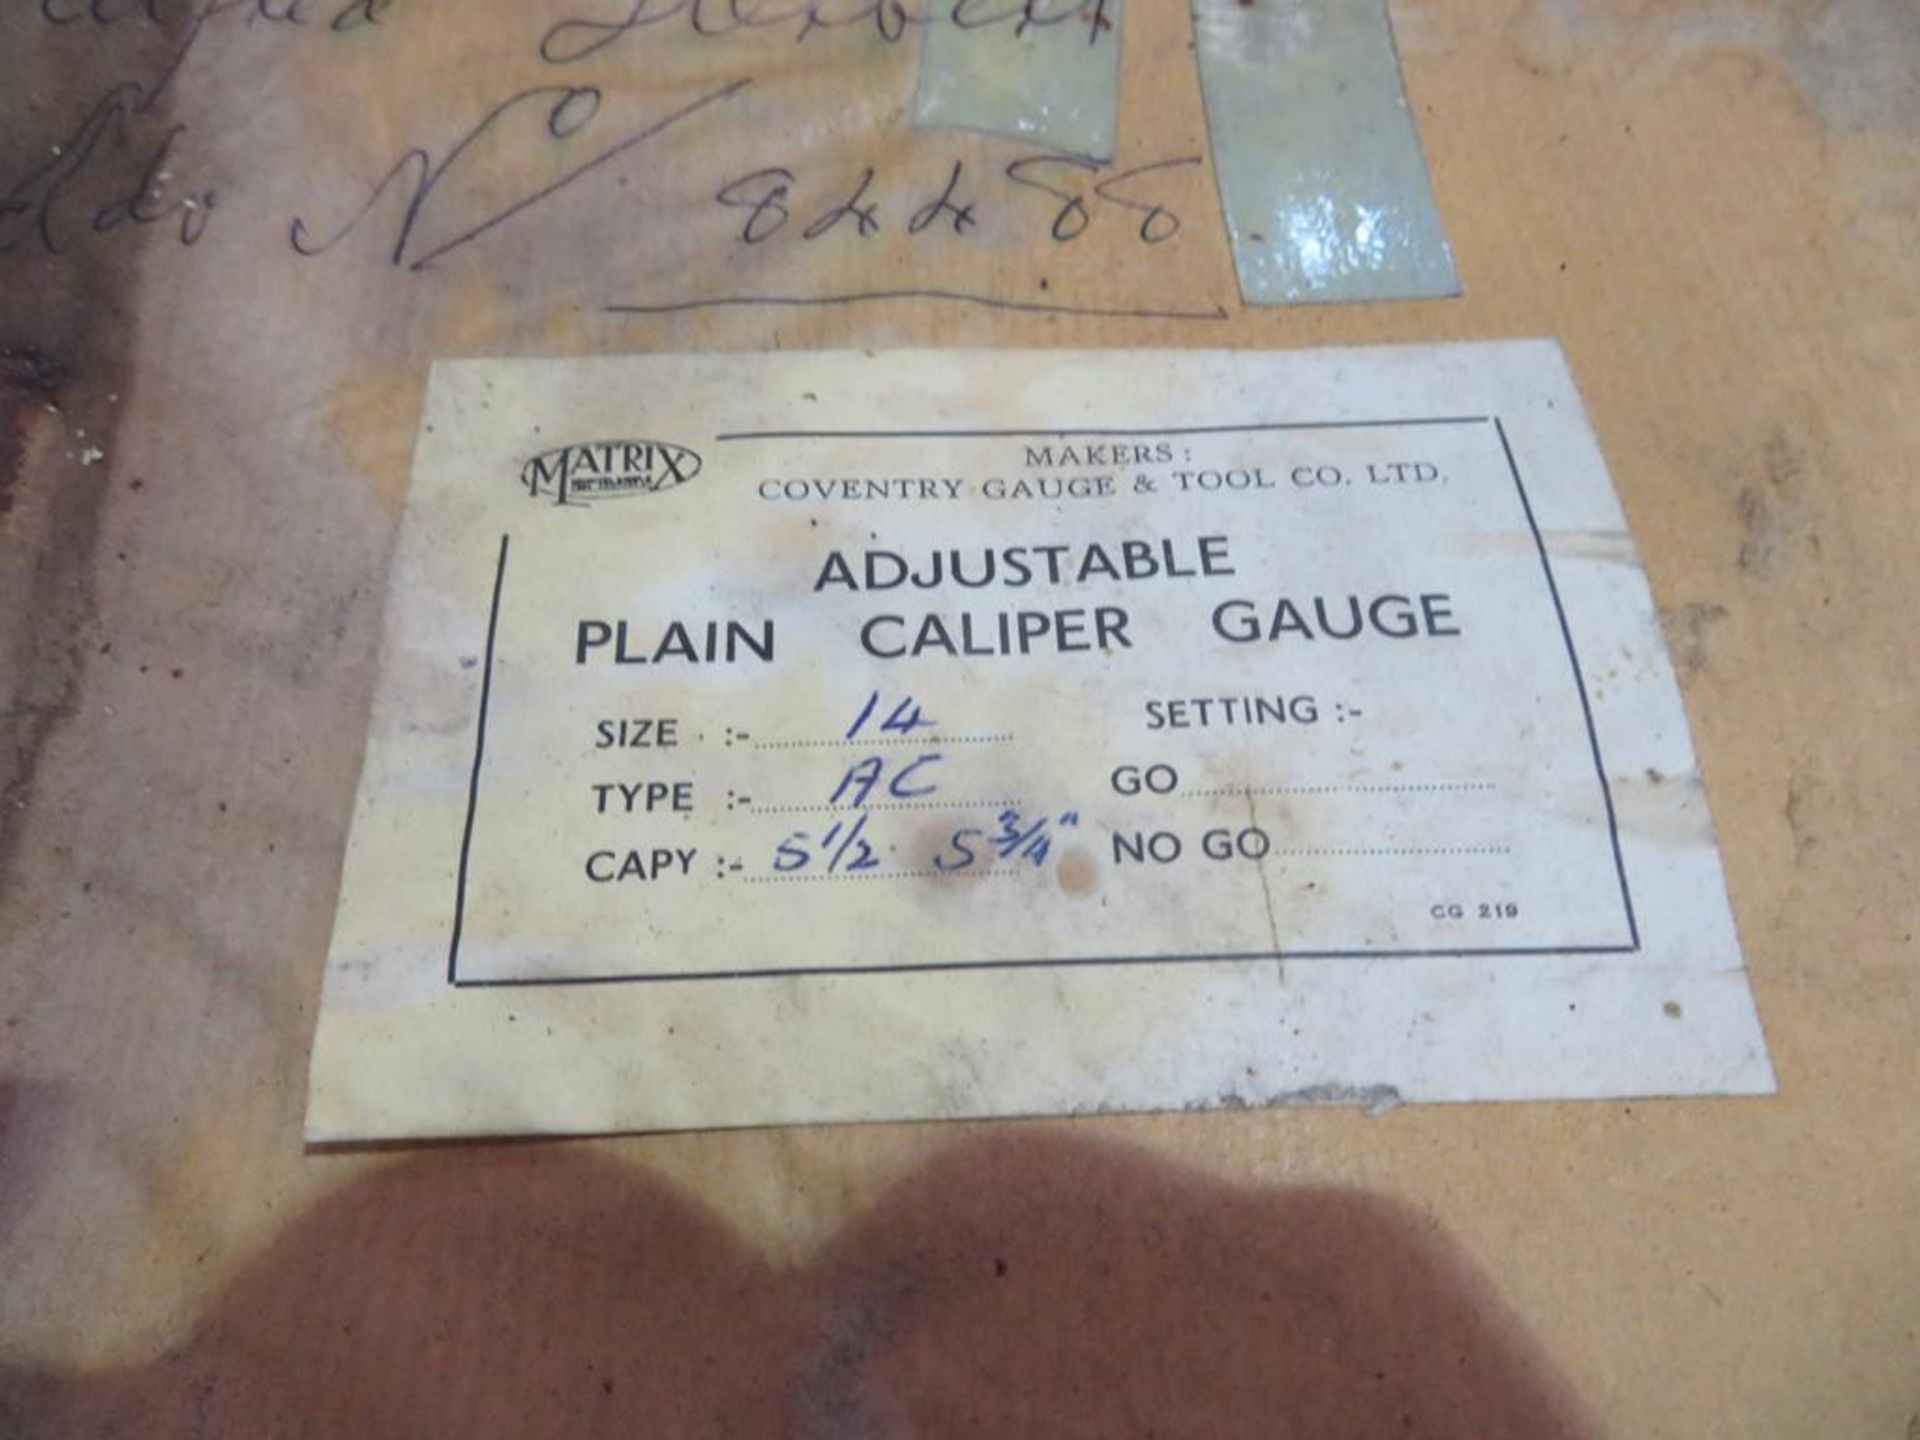 6 x adjustable plain caliper gauges - Image 4 of 5